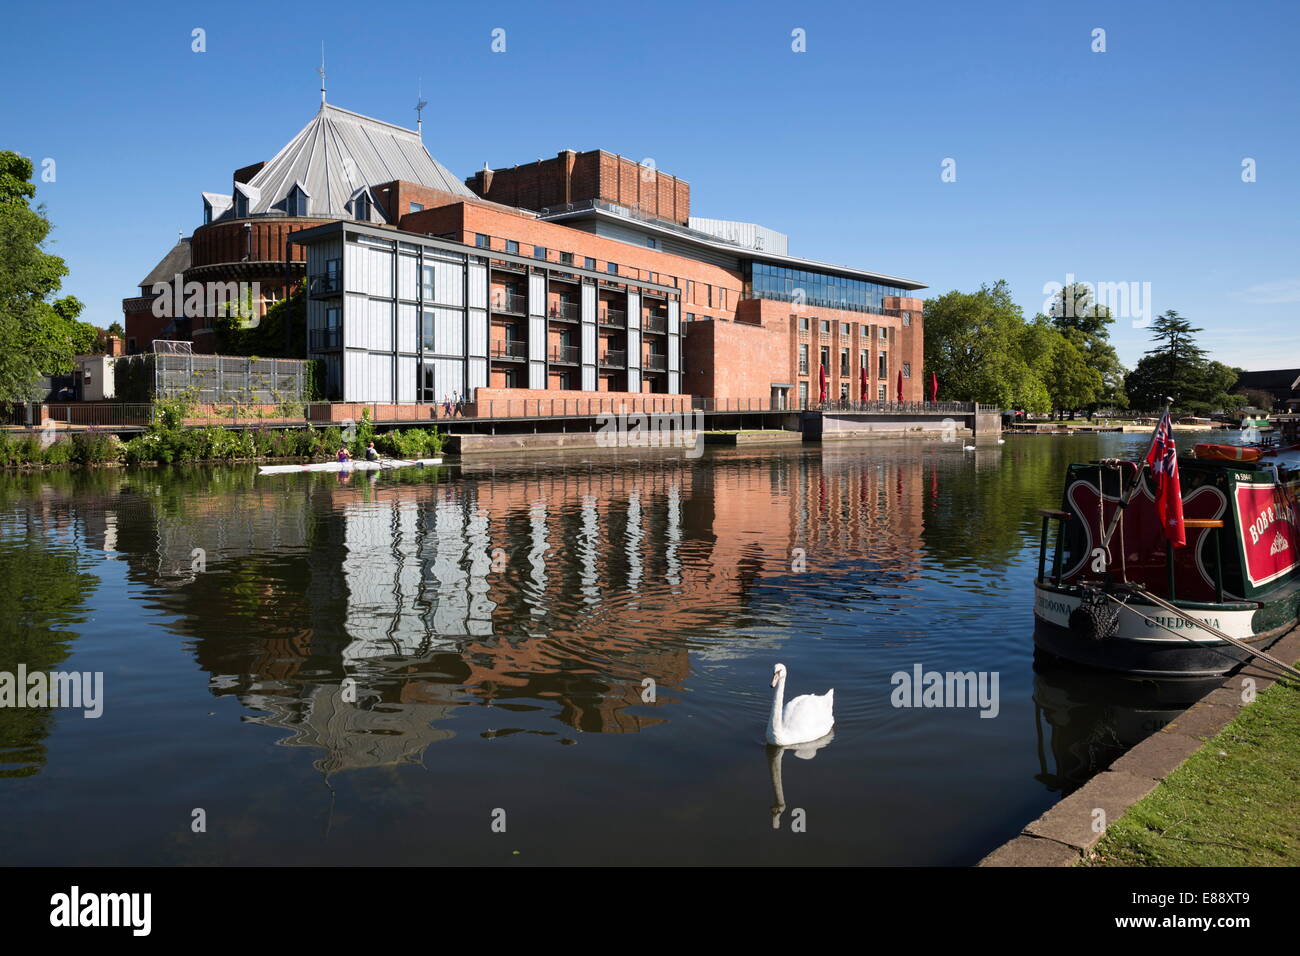 Swan Theatre et le Royal Shakespeare Theatre sur la rivière Avon, Stratford-upon-Avon, Warwickshire, Angleterre, Royaume-Uni, Europe Banque D'Images